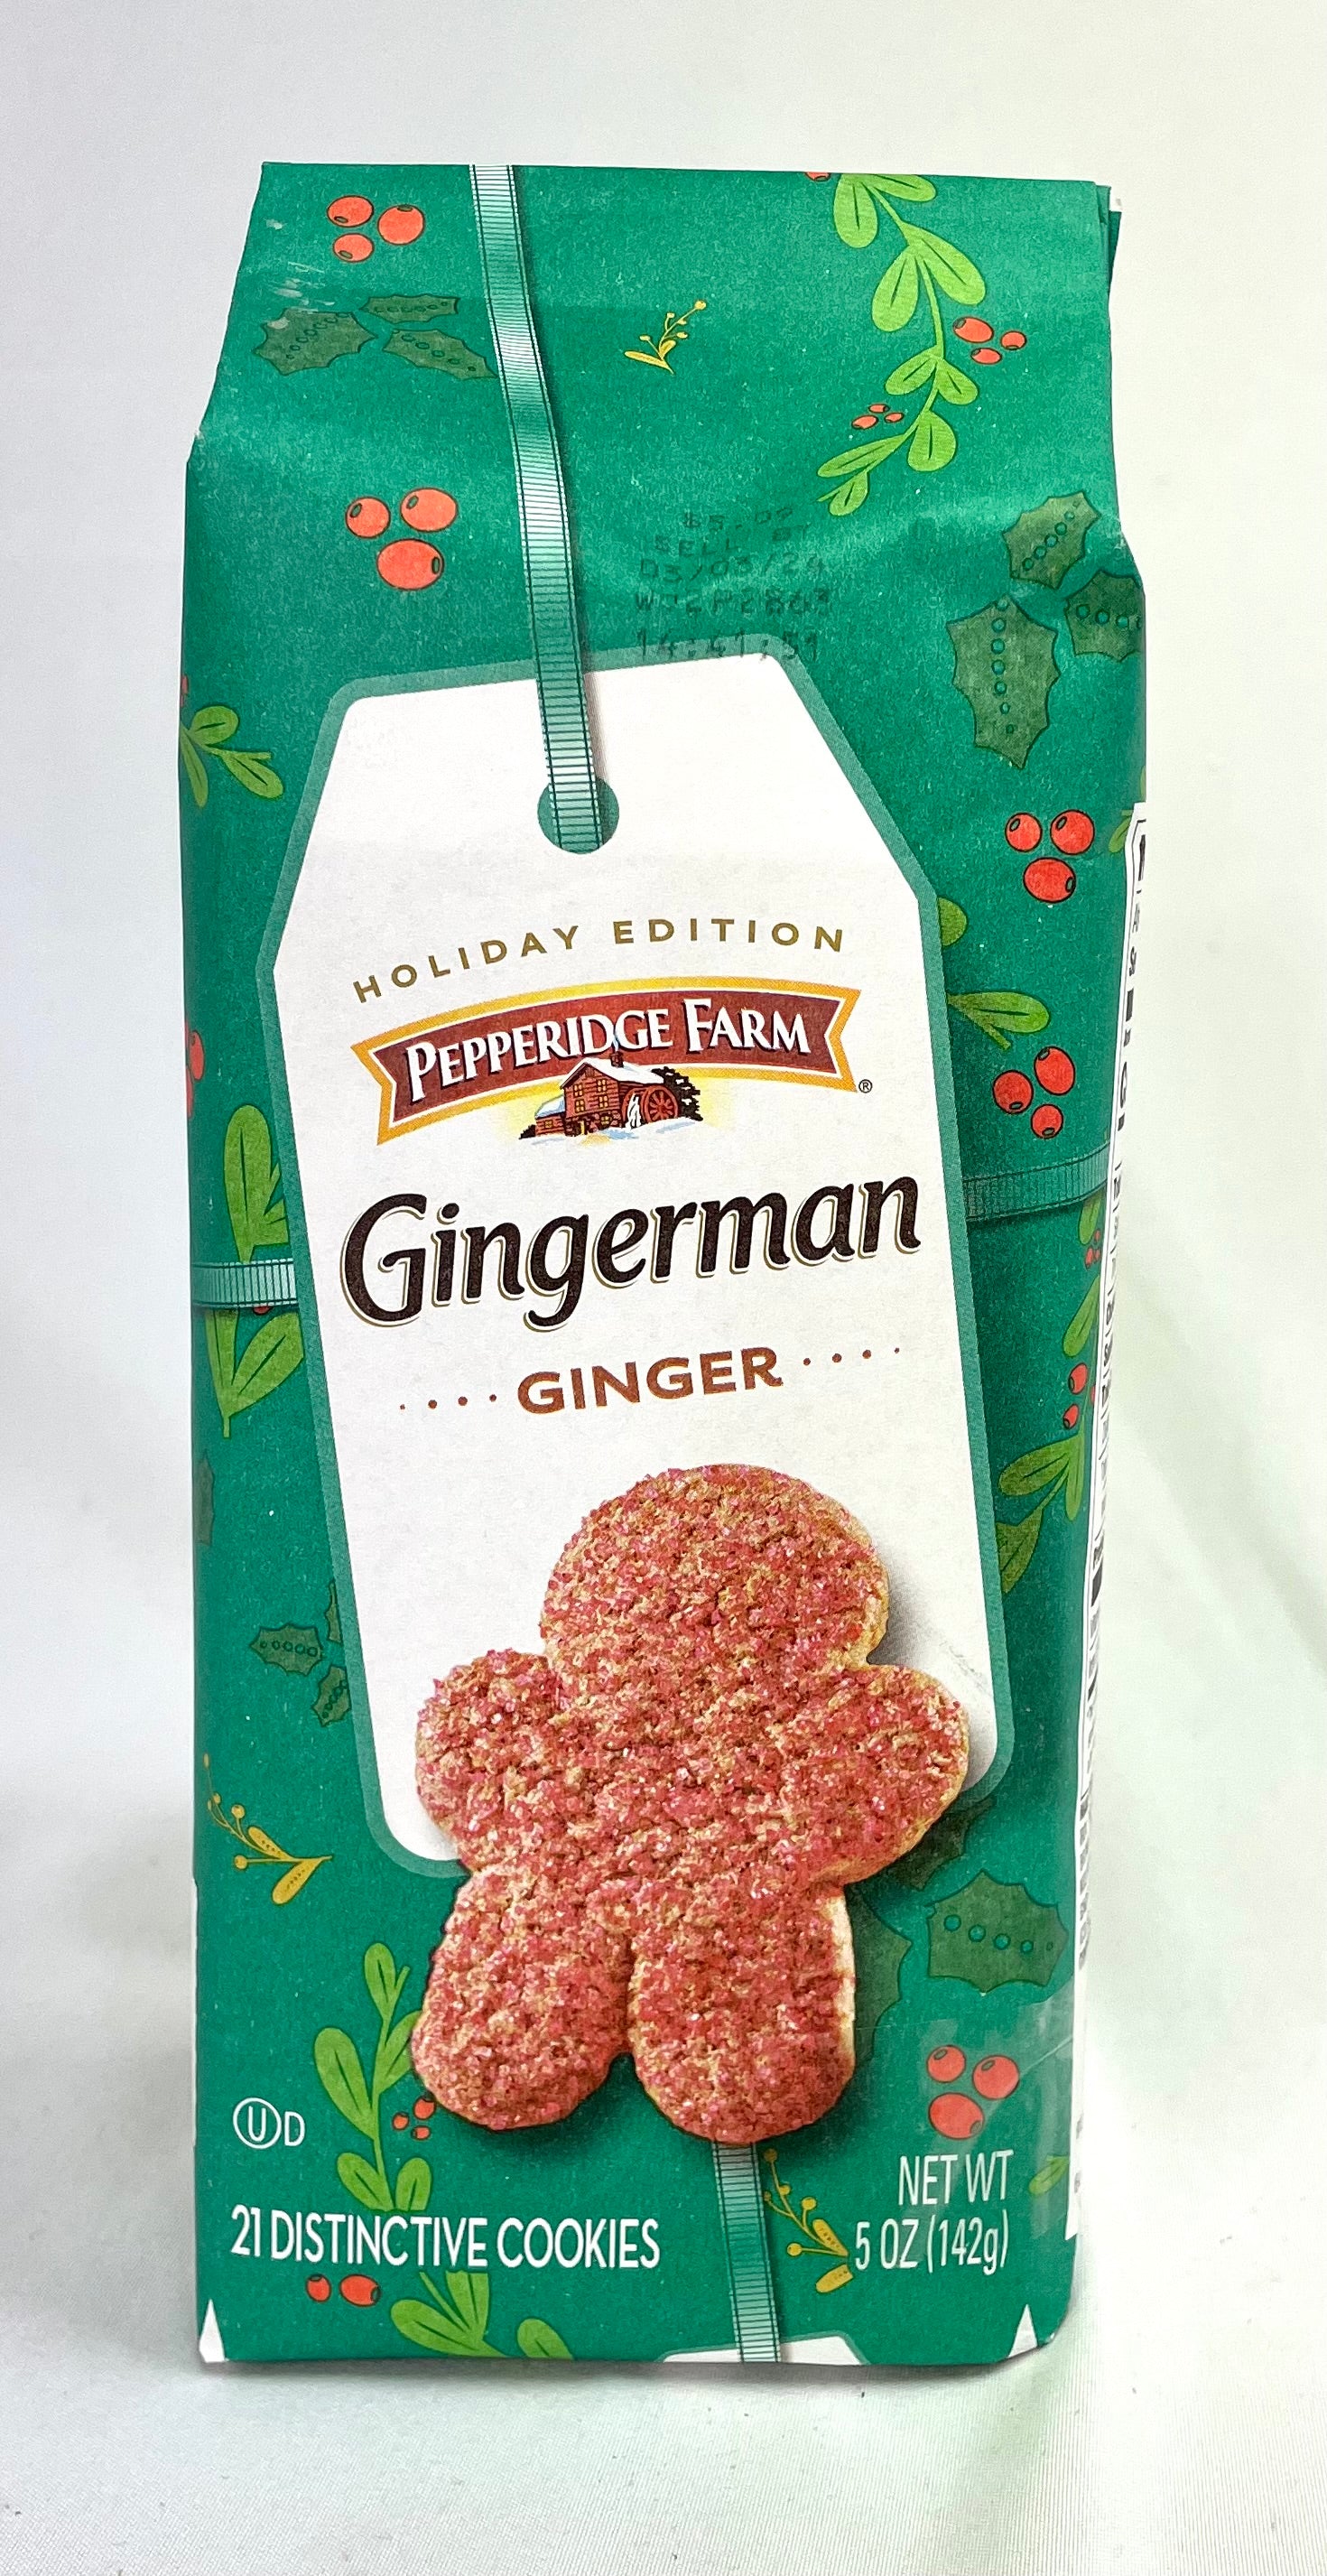 Pepperidge Farm 5oz Bag of Gingerman Cookies - Clearance Item